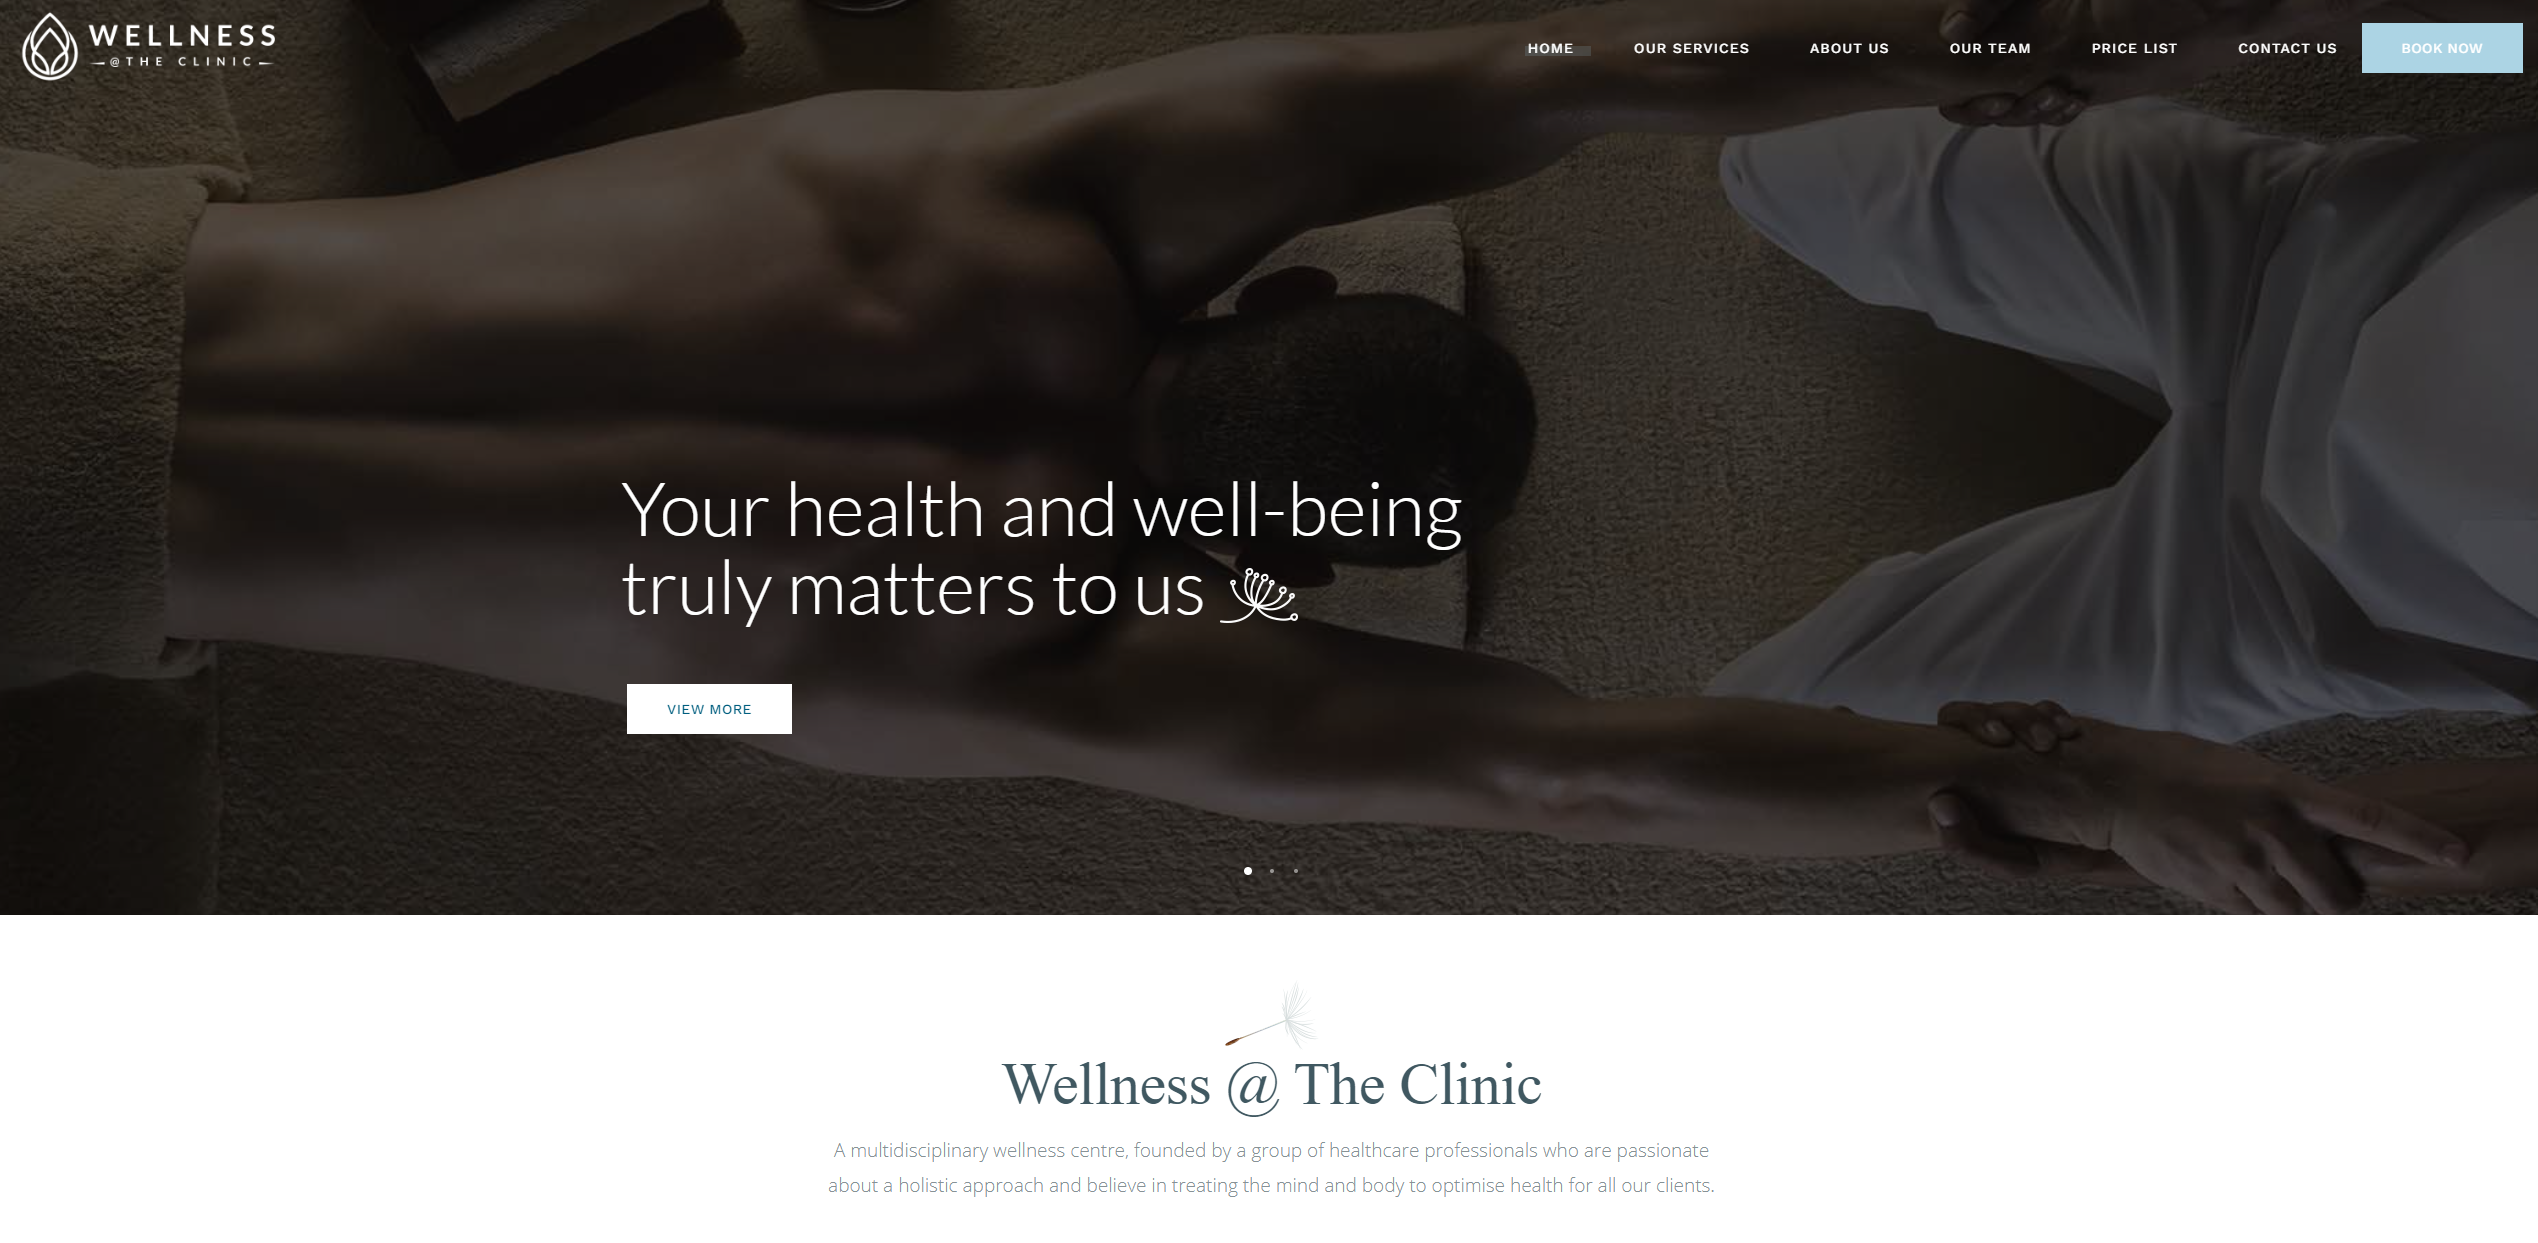 Wellness @ The Clinic